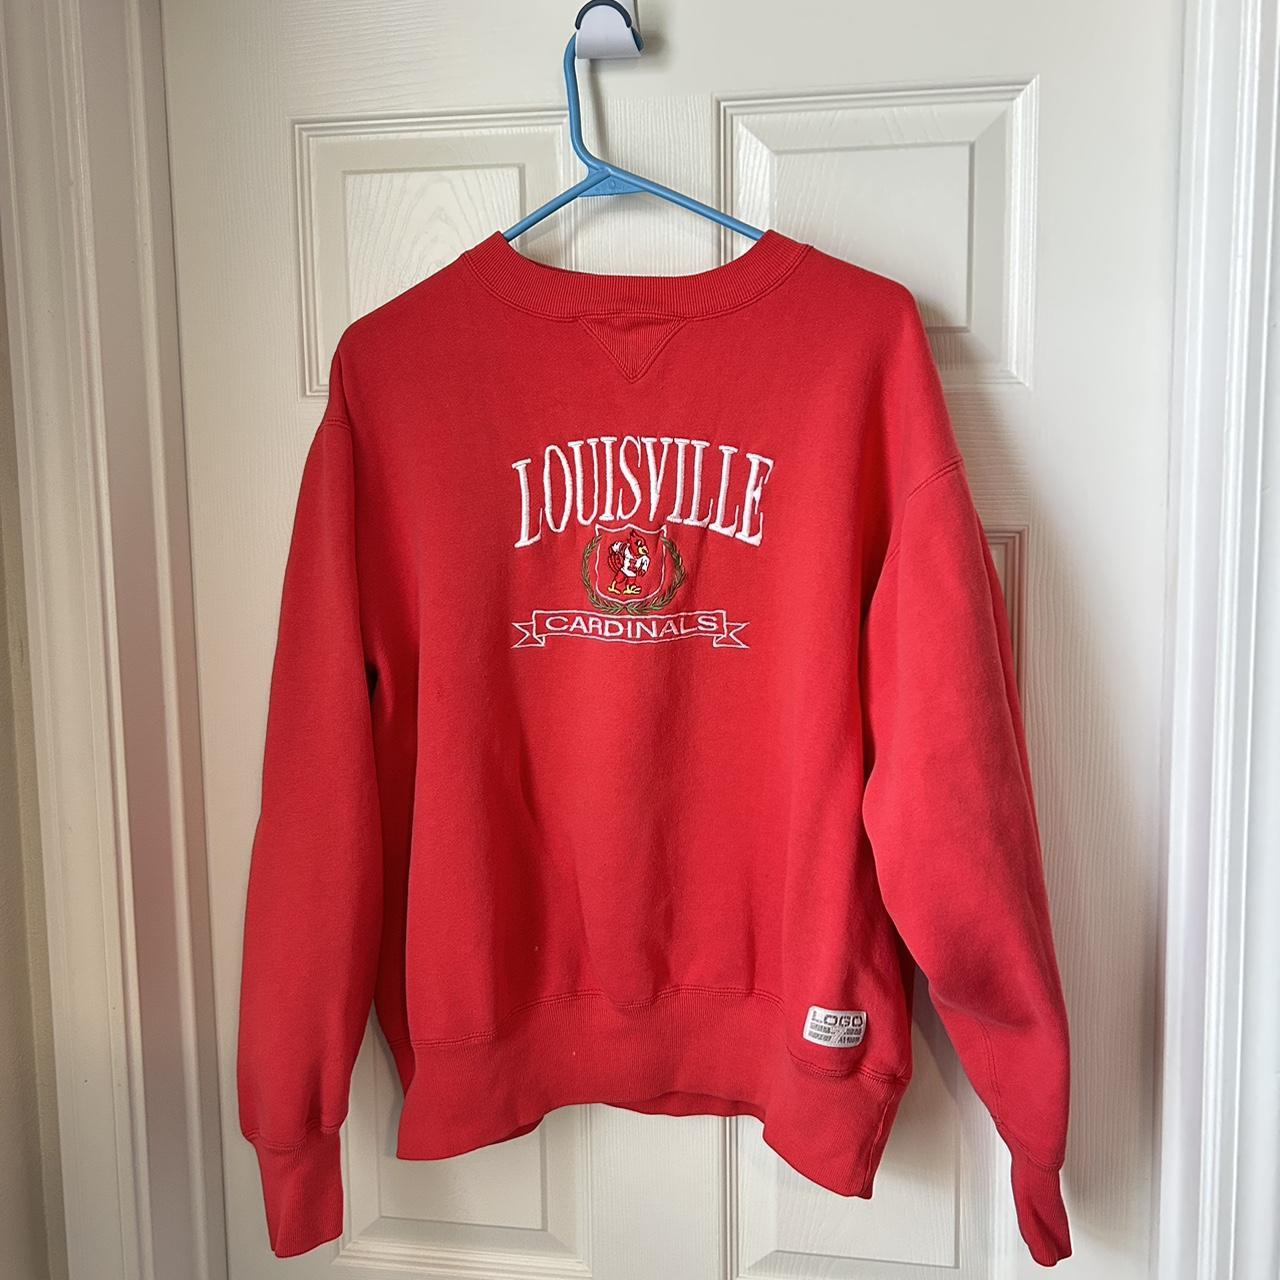 louisville sweatshirt red